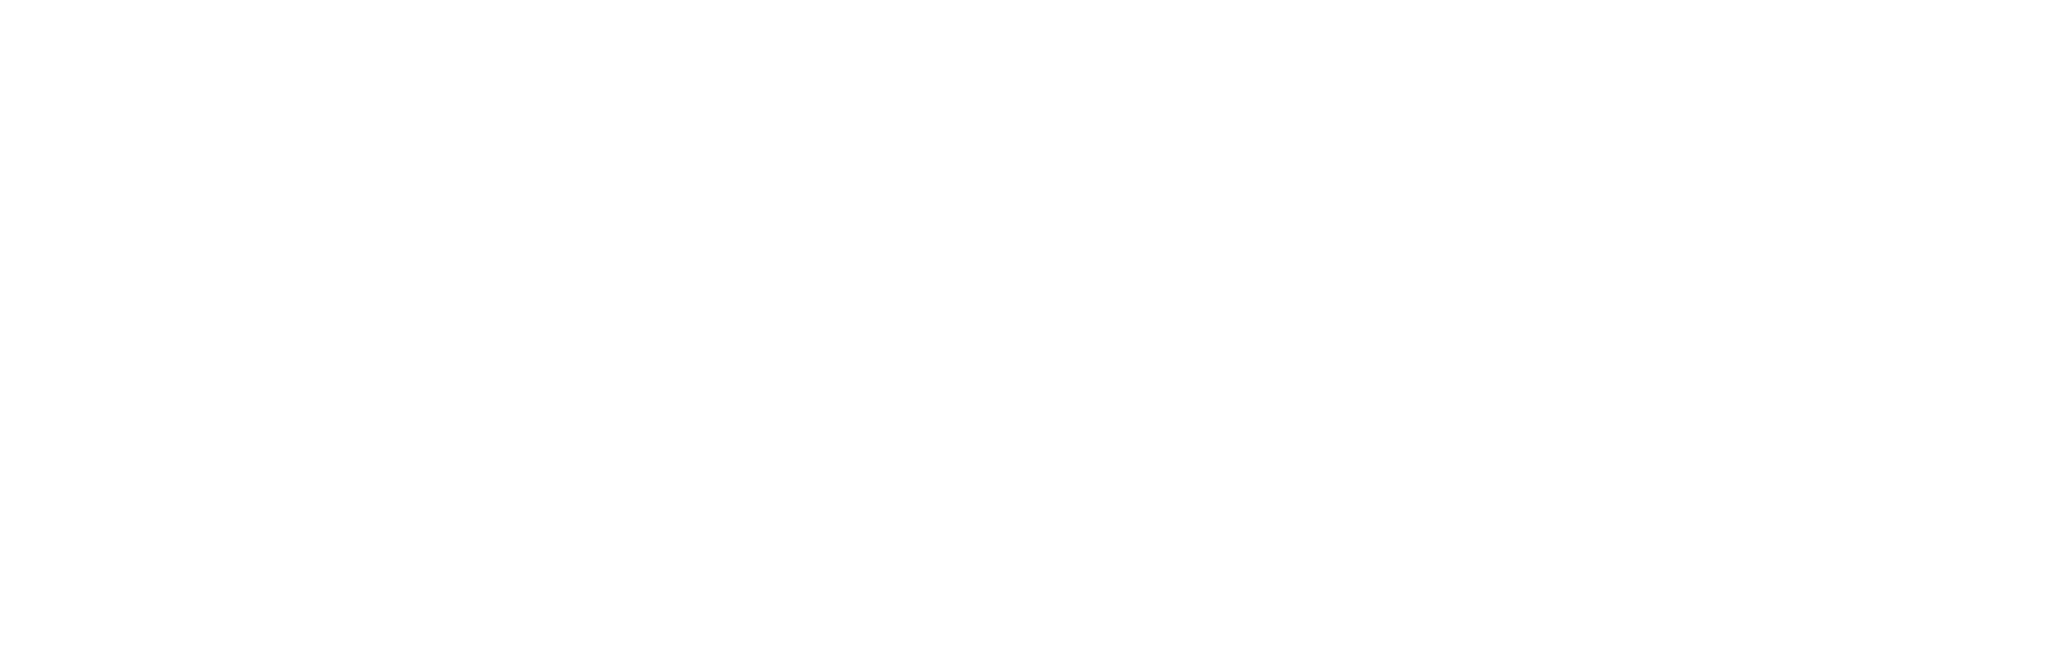 SBimpianti logo